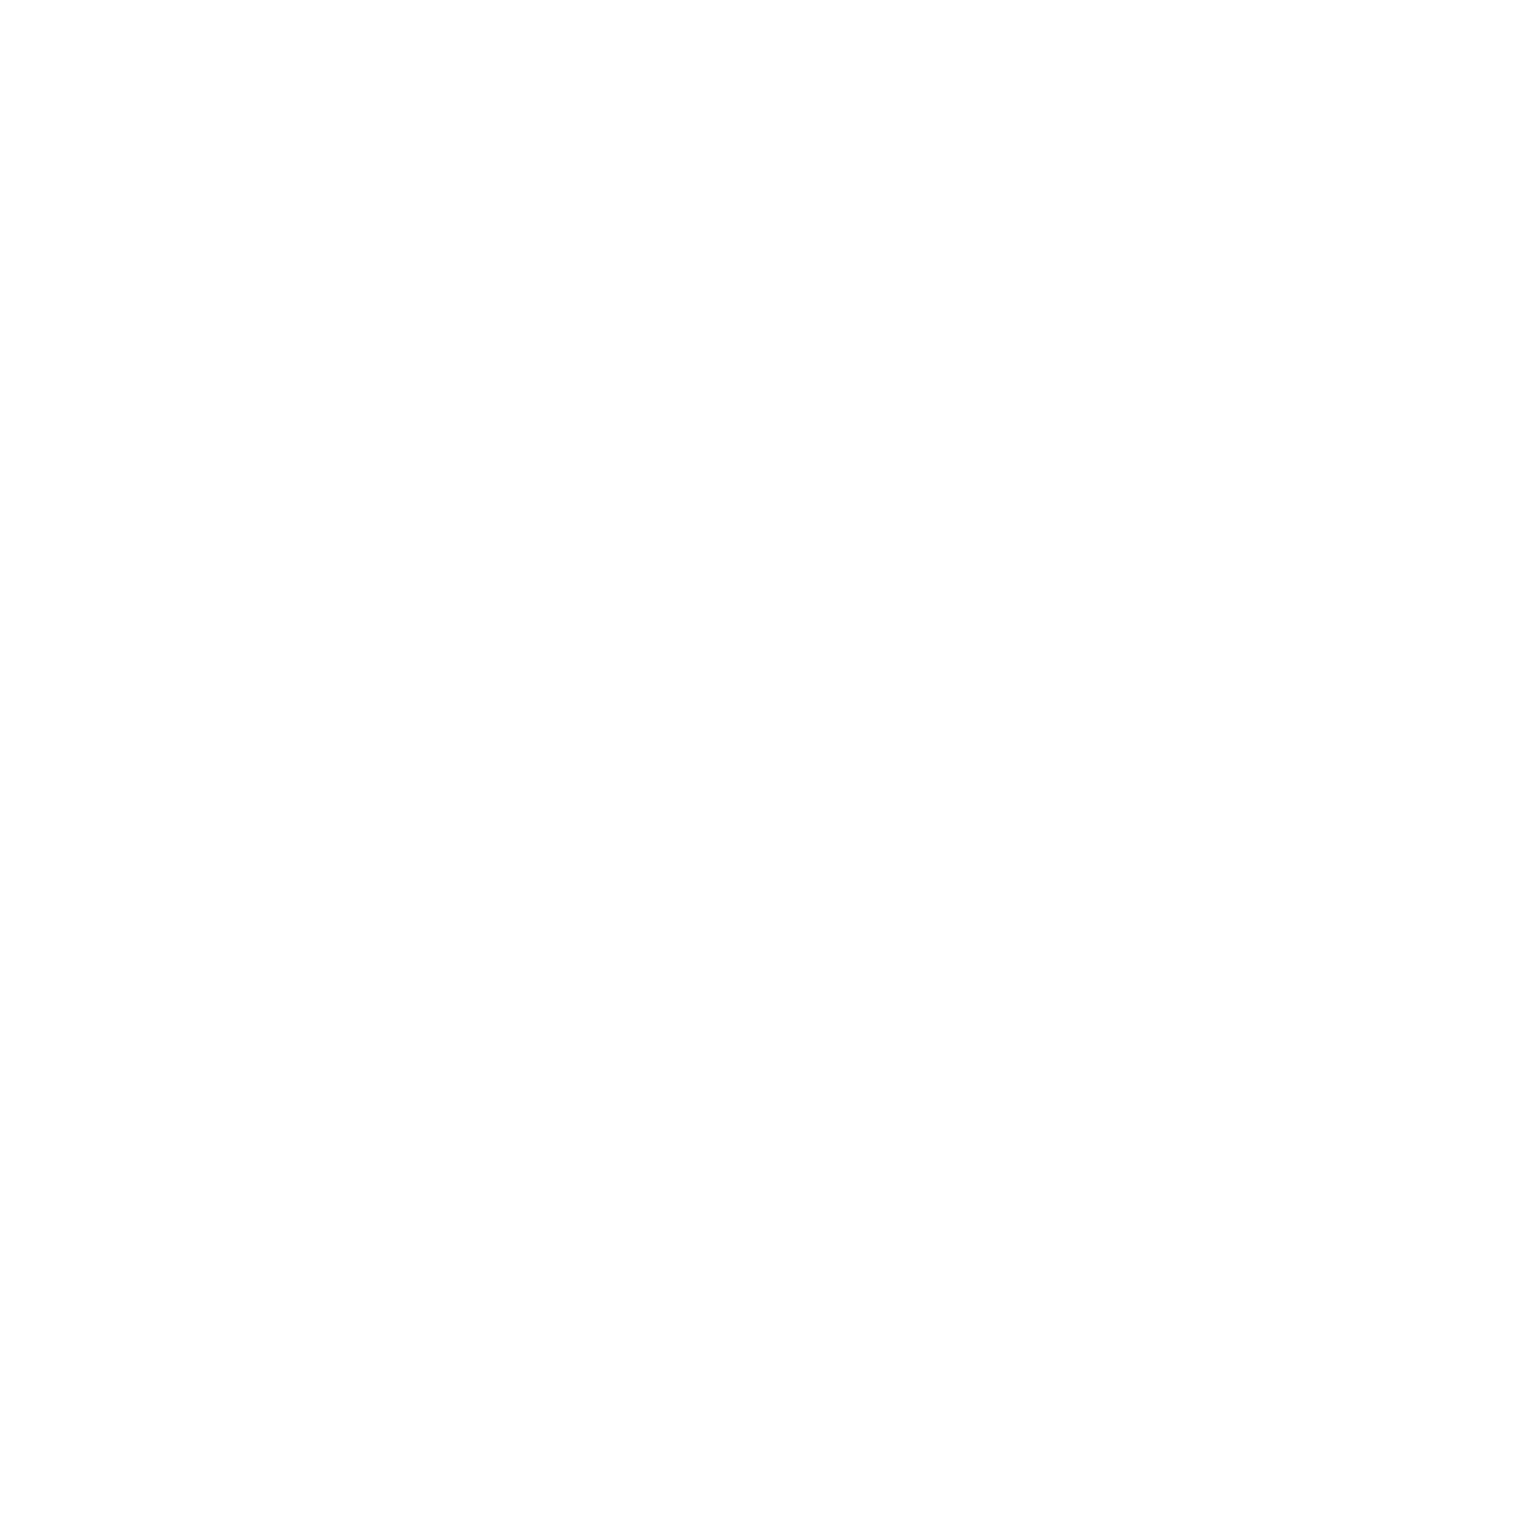 Terran Orbital logo for dark backgrounds (transparent PNG)